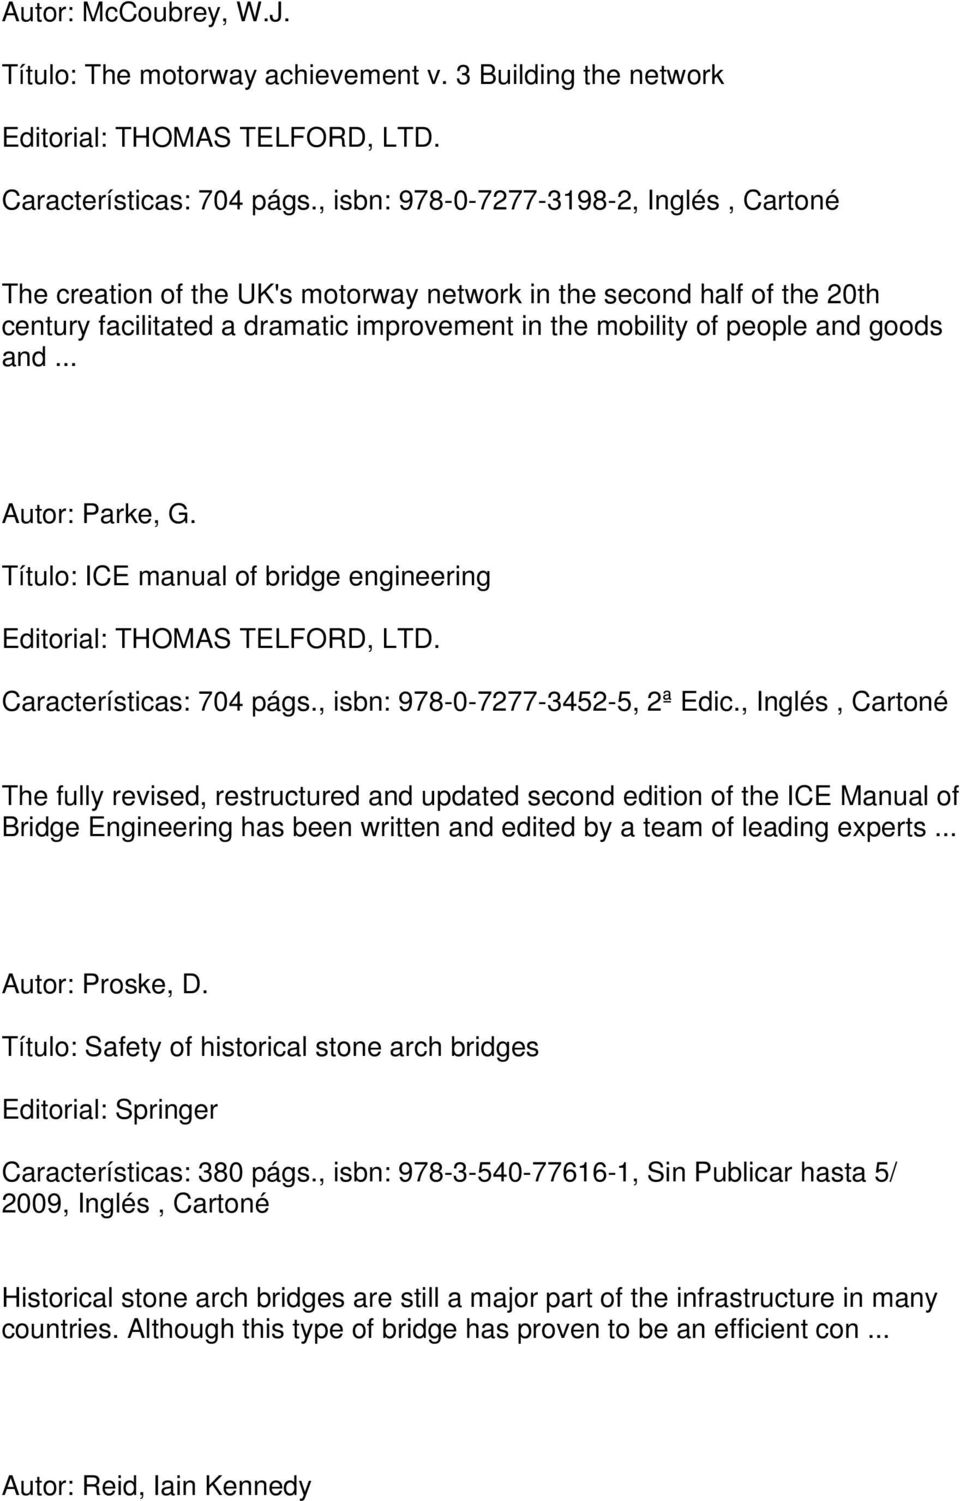 Autor: Parke, G. Título: ICE manual of bridge engineering Editorial: THOMAS TELFORD, LTD. Características: 704 págs., isbn: 978-0-7277-3452-5, 2ª Edic.